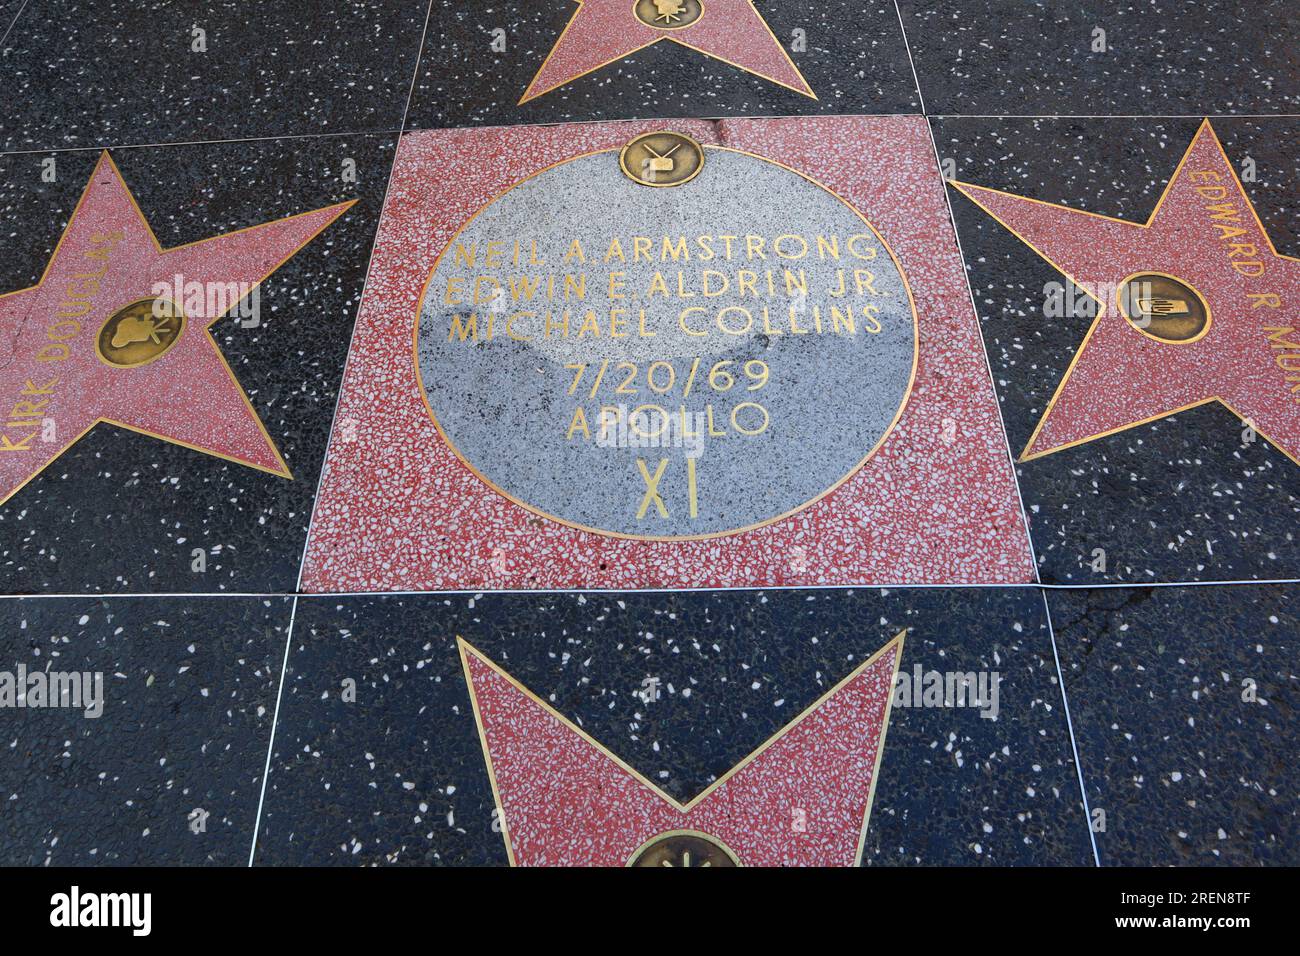 Hollywood, Kalifornien: Star von APOLLO XI – 7-20-69 NEIL A. ARMSTRONG, EDWIN E. ALDRIN JR., MICHAEL COLLINS auf dem Hollywood Walk of Fame, Hollywood Blvd Stockfoto